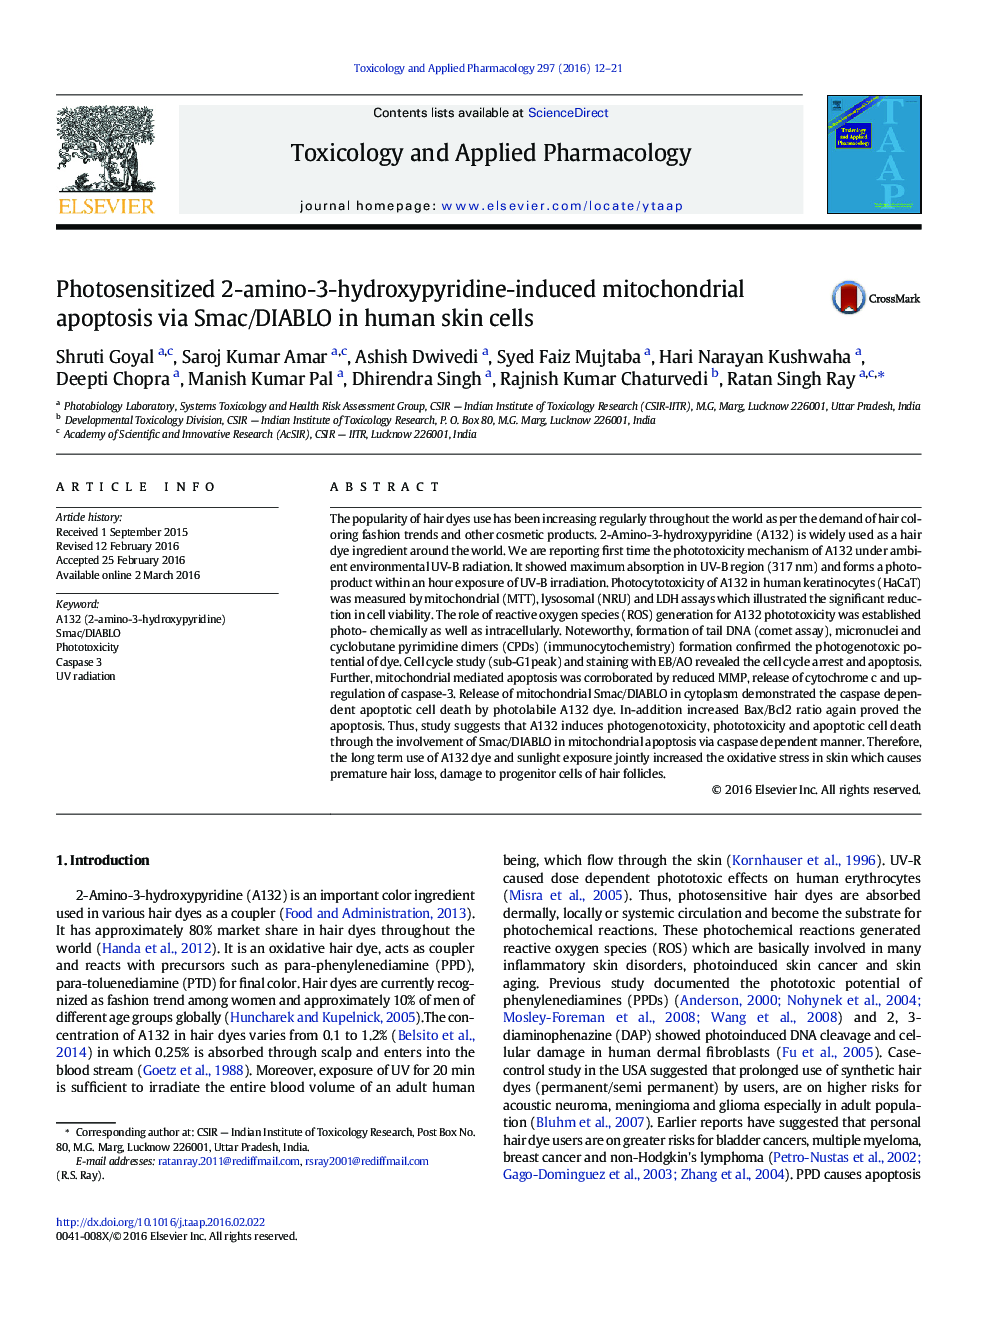 Photosensitized 2-amino-3-hydroxypyridine-induced mitochondrial apoptosis via Smac/DIABLO in human skin cells